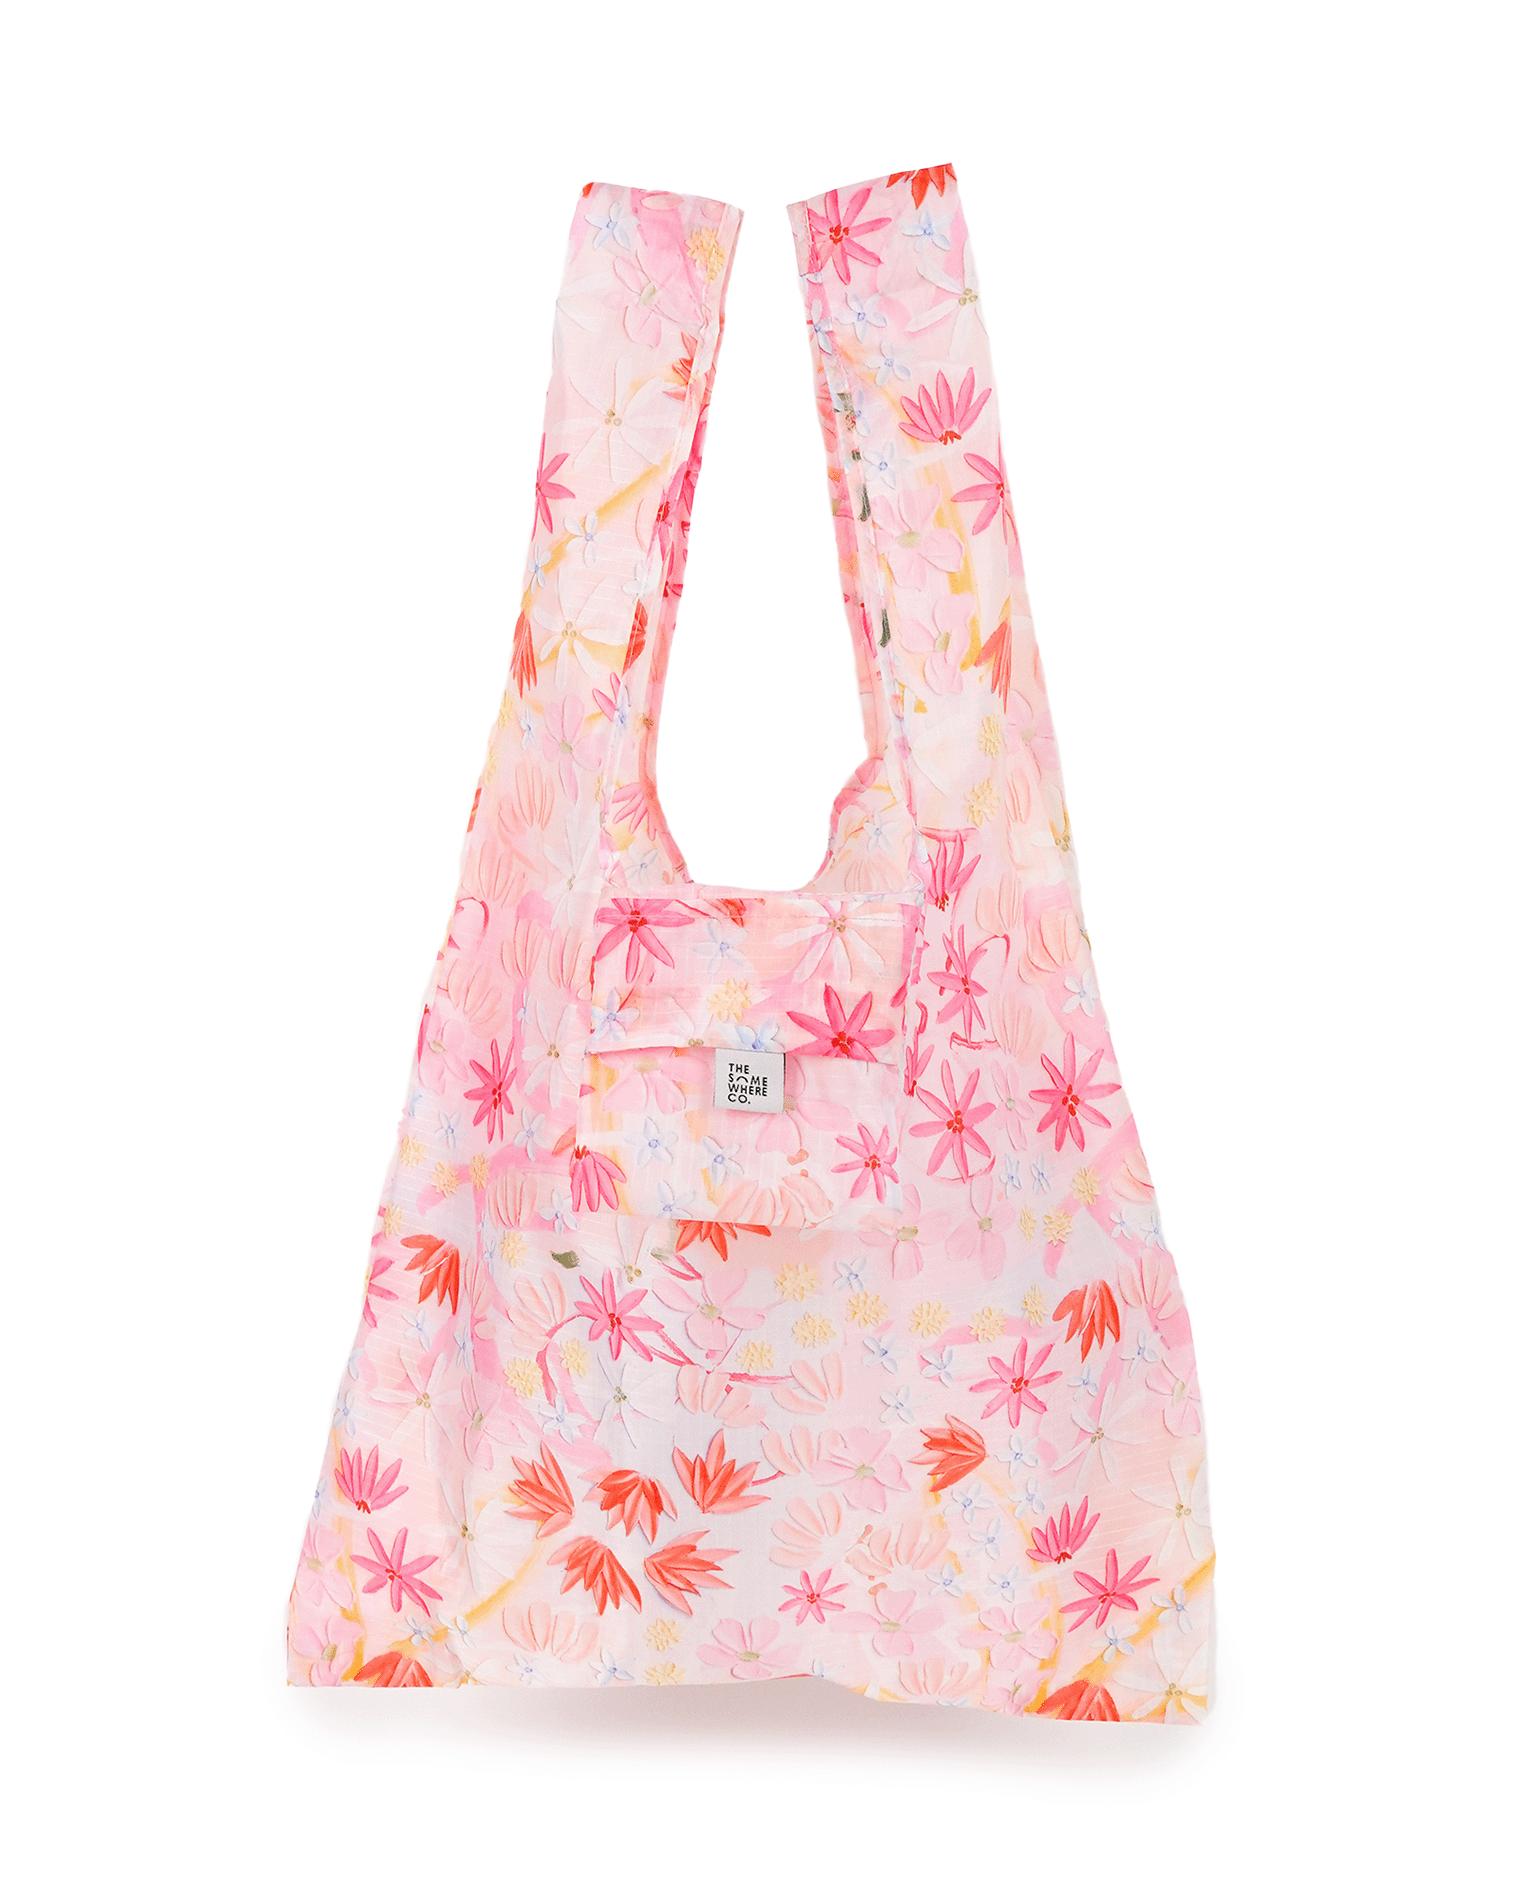 Daisy Chain Reusable Shopping Bag